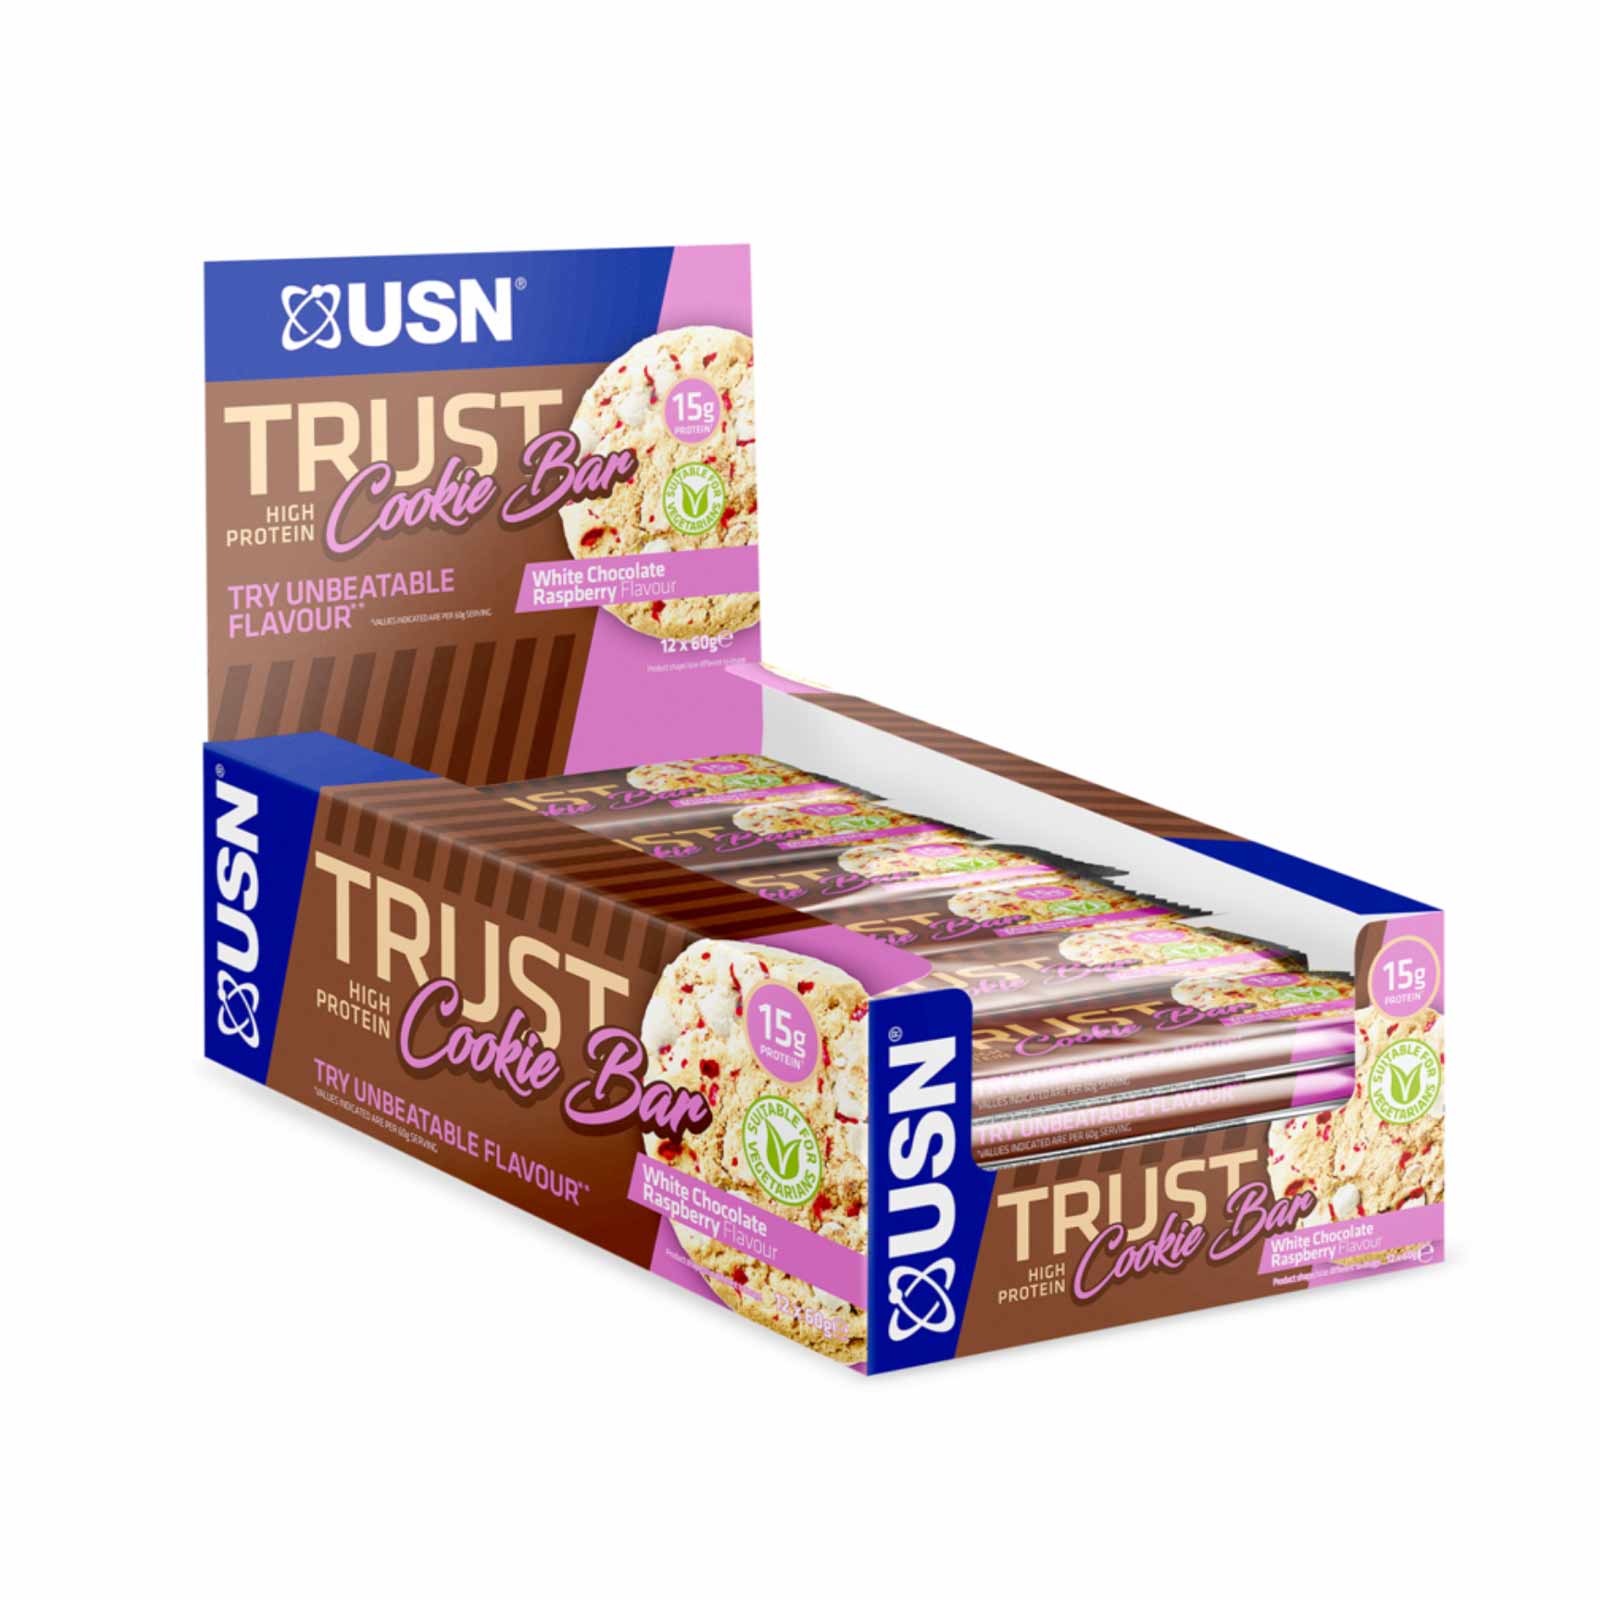 USN Trust Cookie Bar - Double Chocolate (12 Bars)